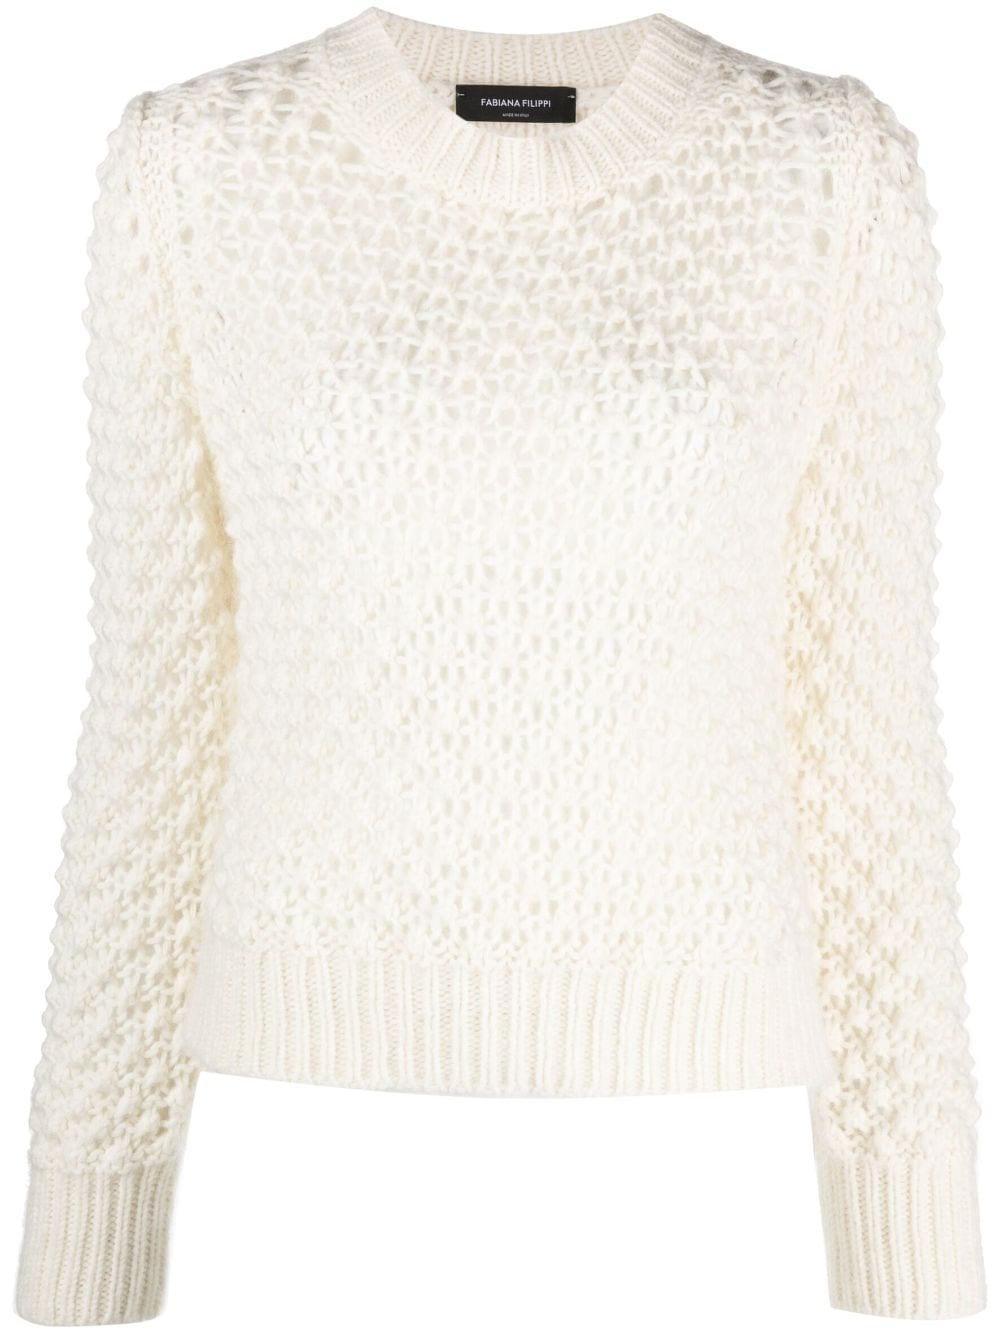 Fabiana Filippi open-knit long-sleeve jumper - White